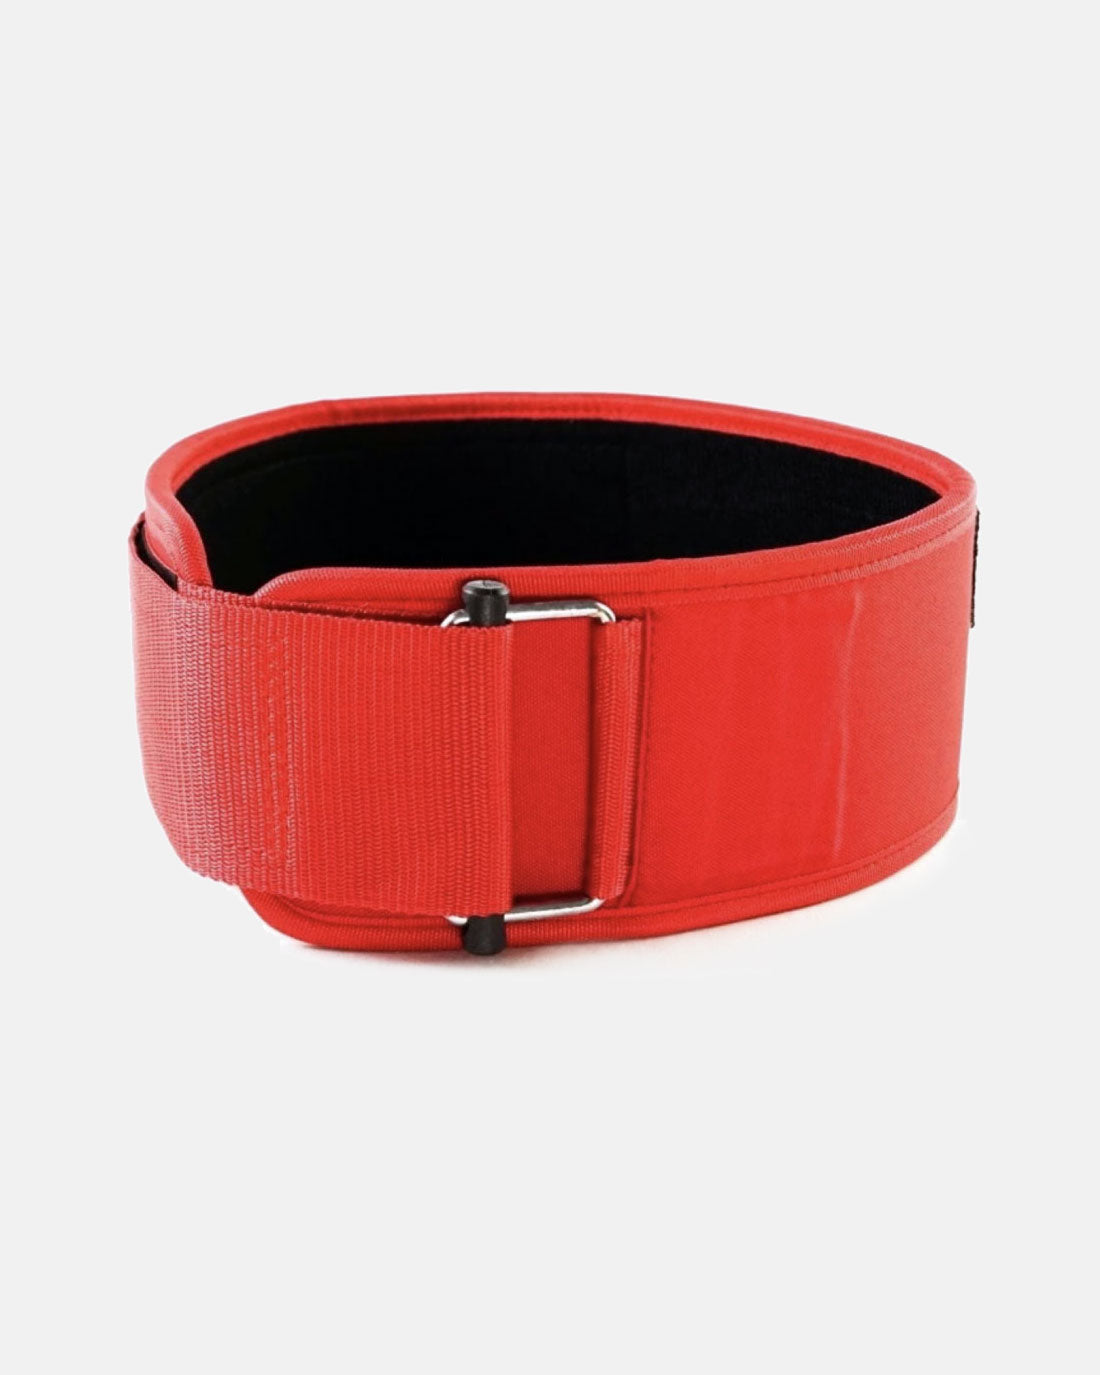 2pood weightlifting belt red kilo